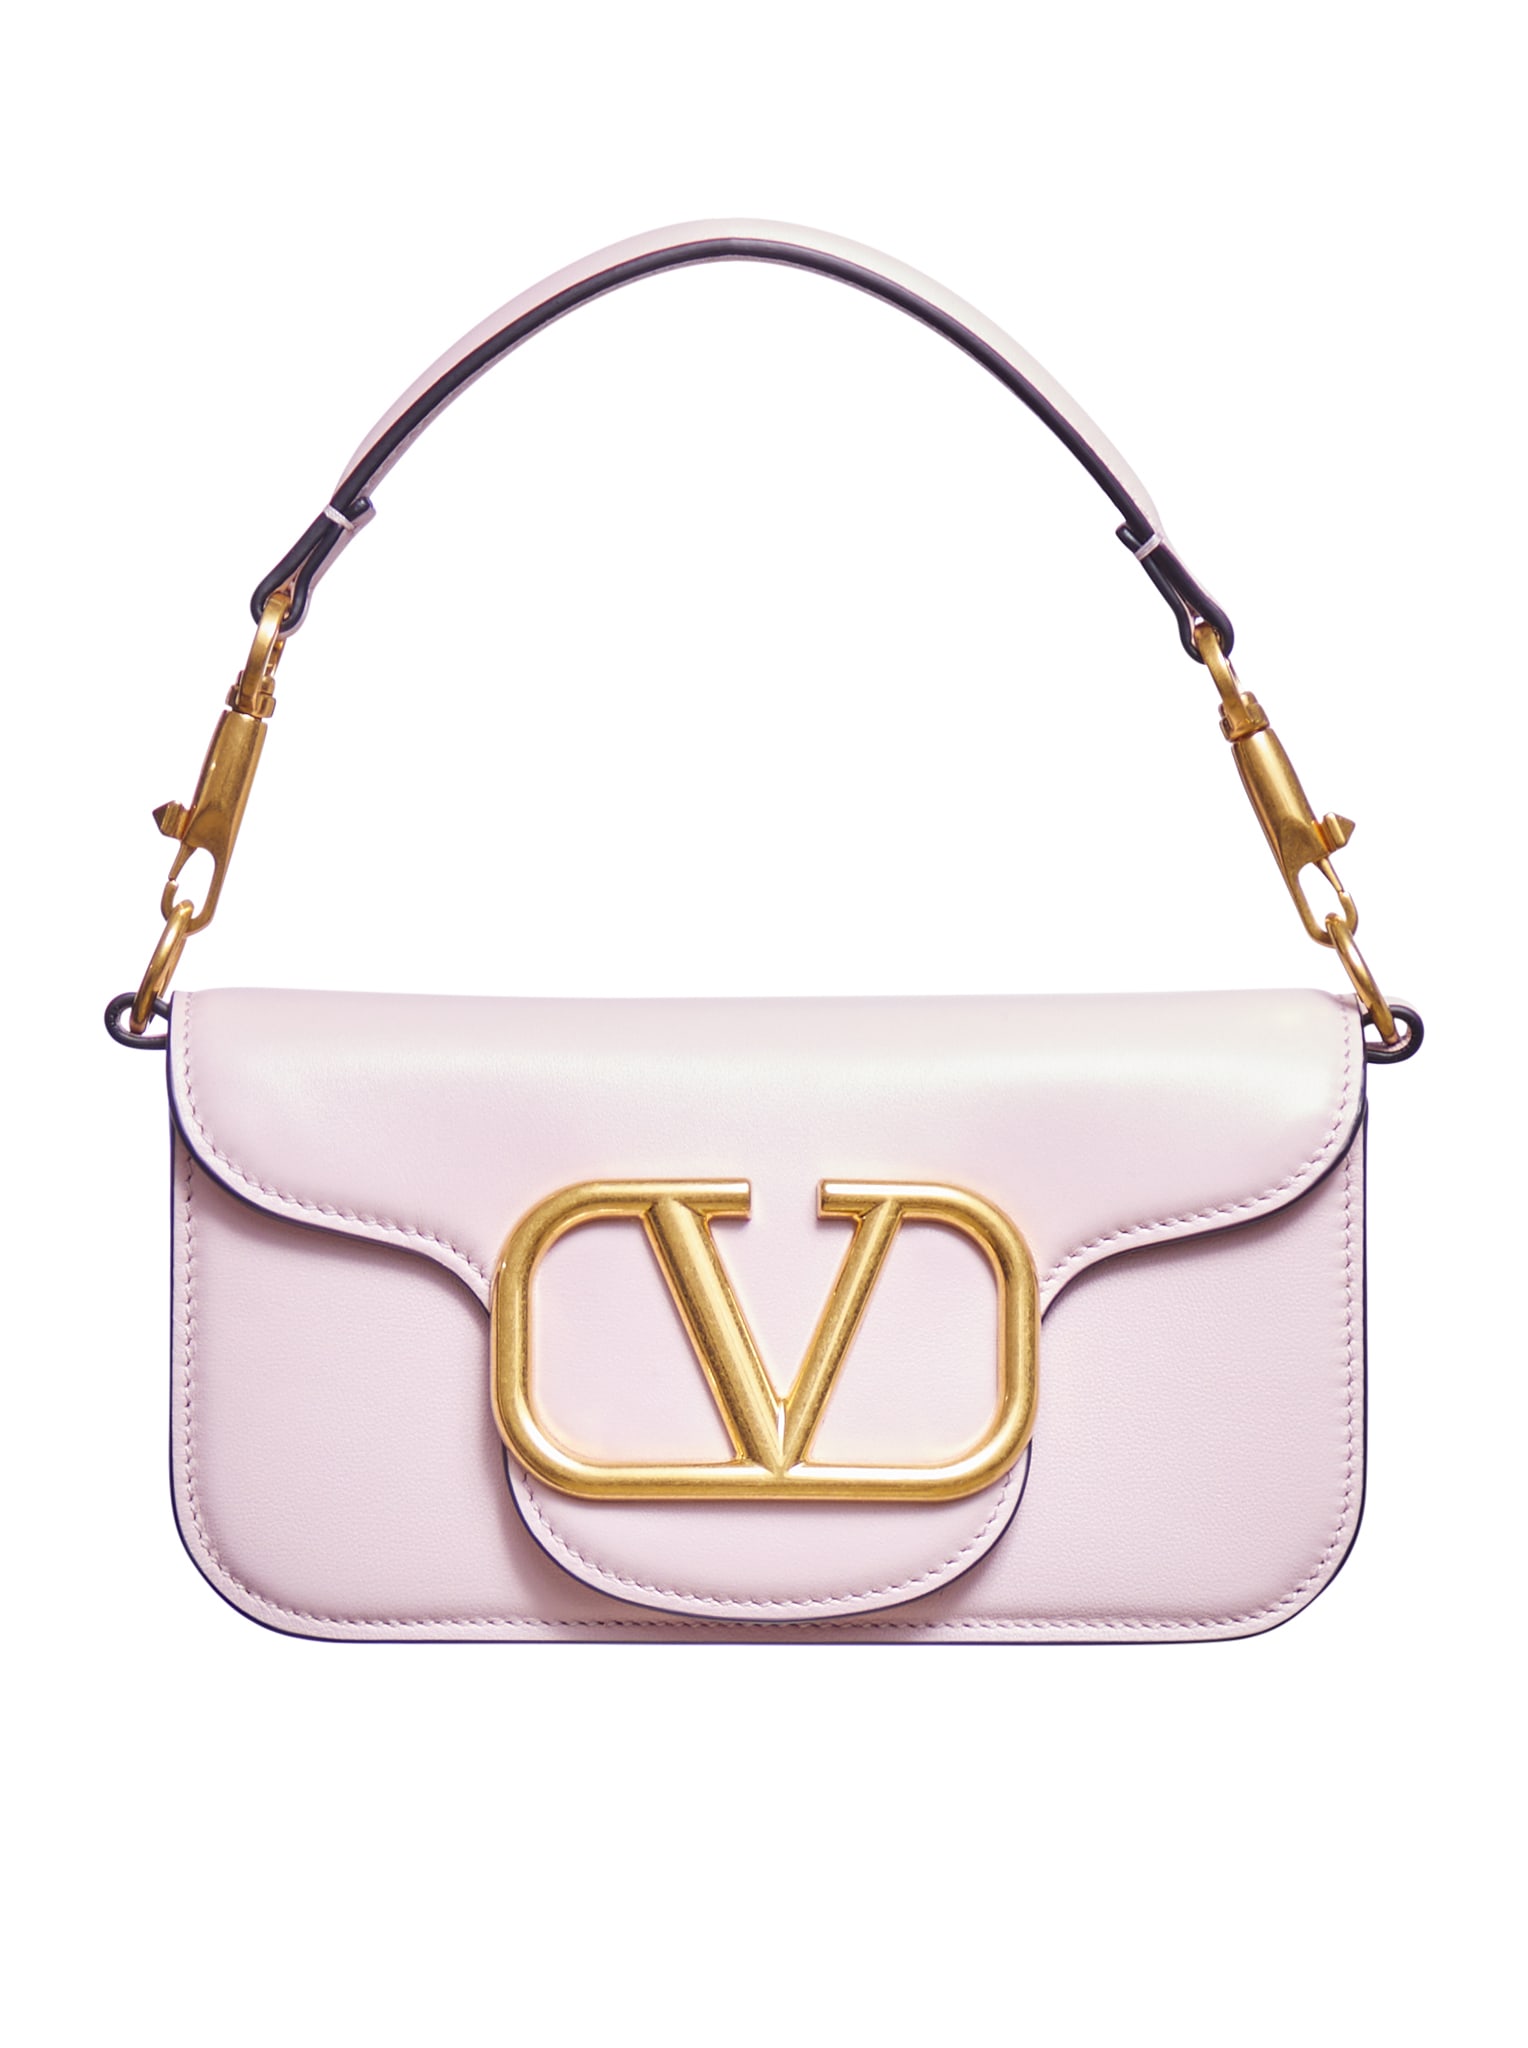 Loco Vitello Hobo Bag - Valentino Garavani - Pink - Leather